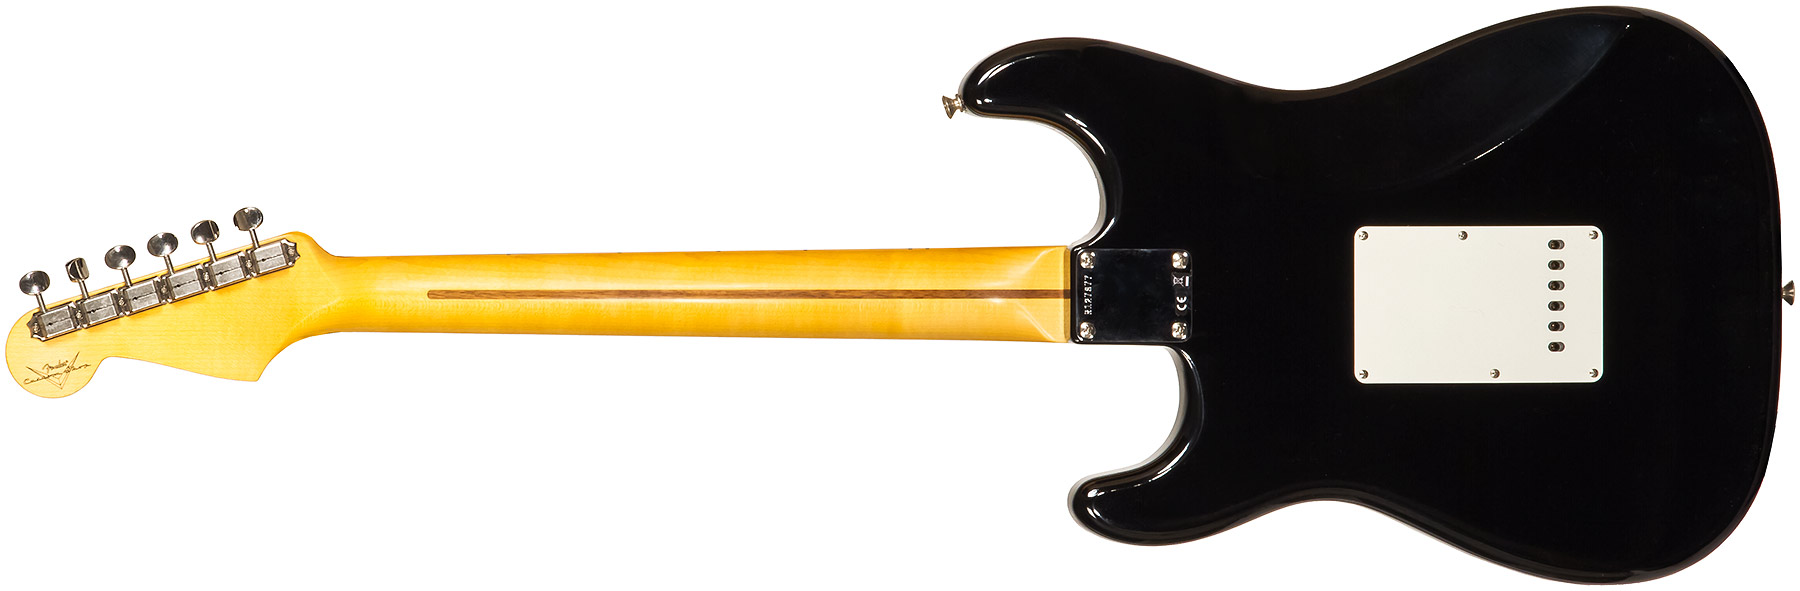 Fender Custom Shop Strat 1955 3s Trem Mn #r127877 - Closet Classic Black - E-Gitarre in Str-Form - Variation 1